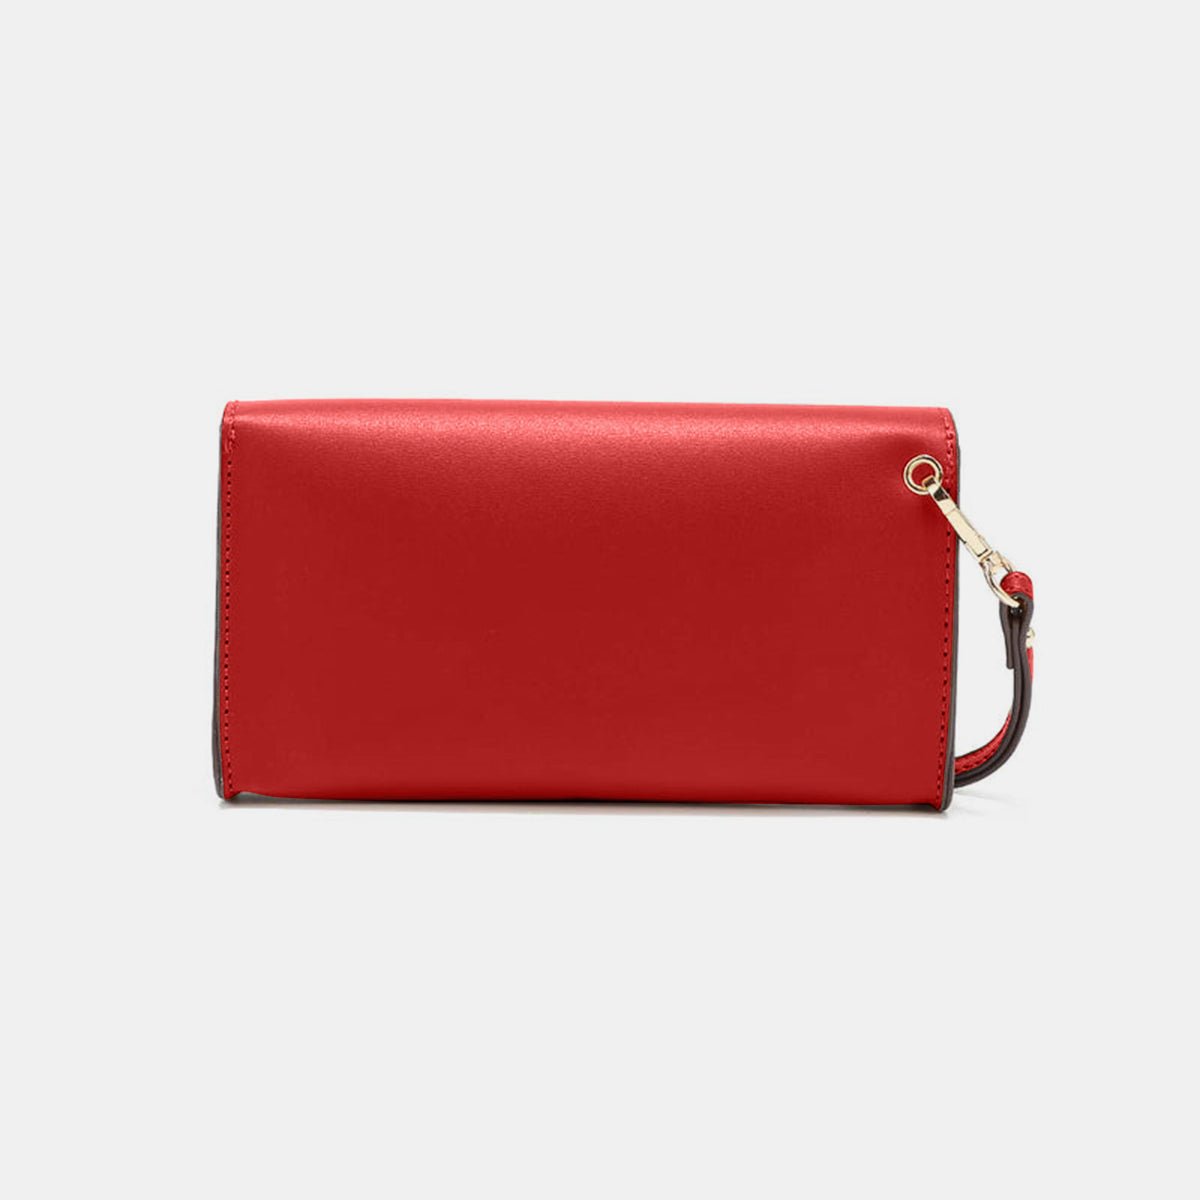 3-Piece Vegan Leather Handbag SetHandbag SetNicole Lee USA